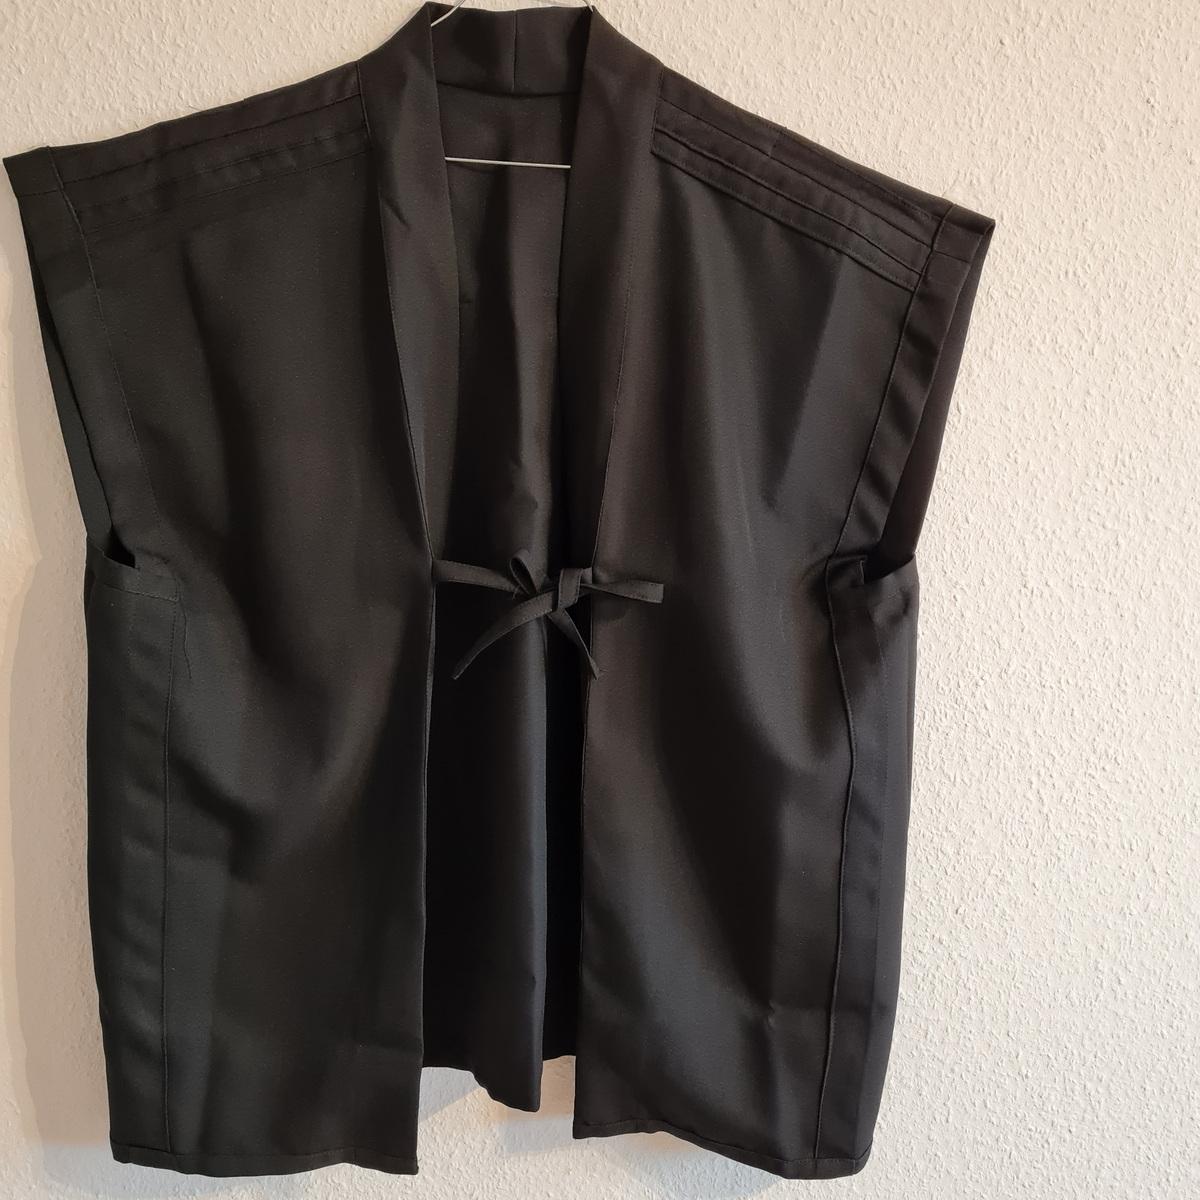 Jinbaori made of gabardine - black (size 165) ➤ www.bokken-shop.de ✅ suitable for Iaido, Aikdo, Kendo, Jodo ✓ Your Budo specialist dealer!